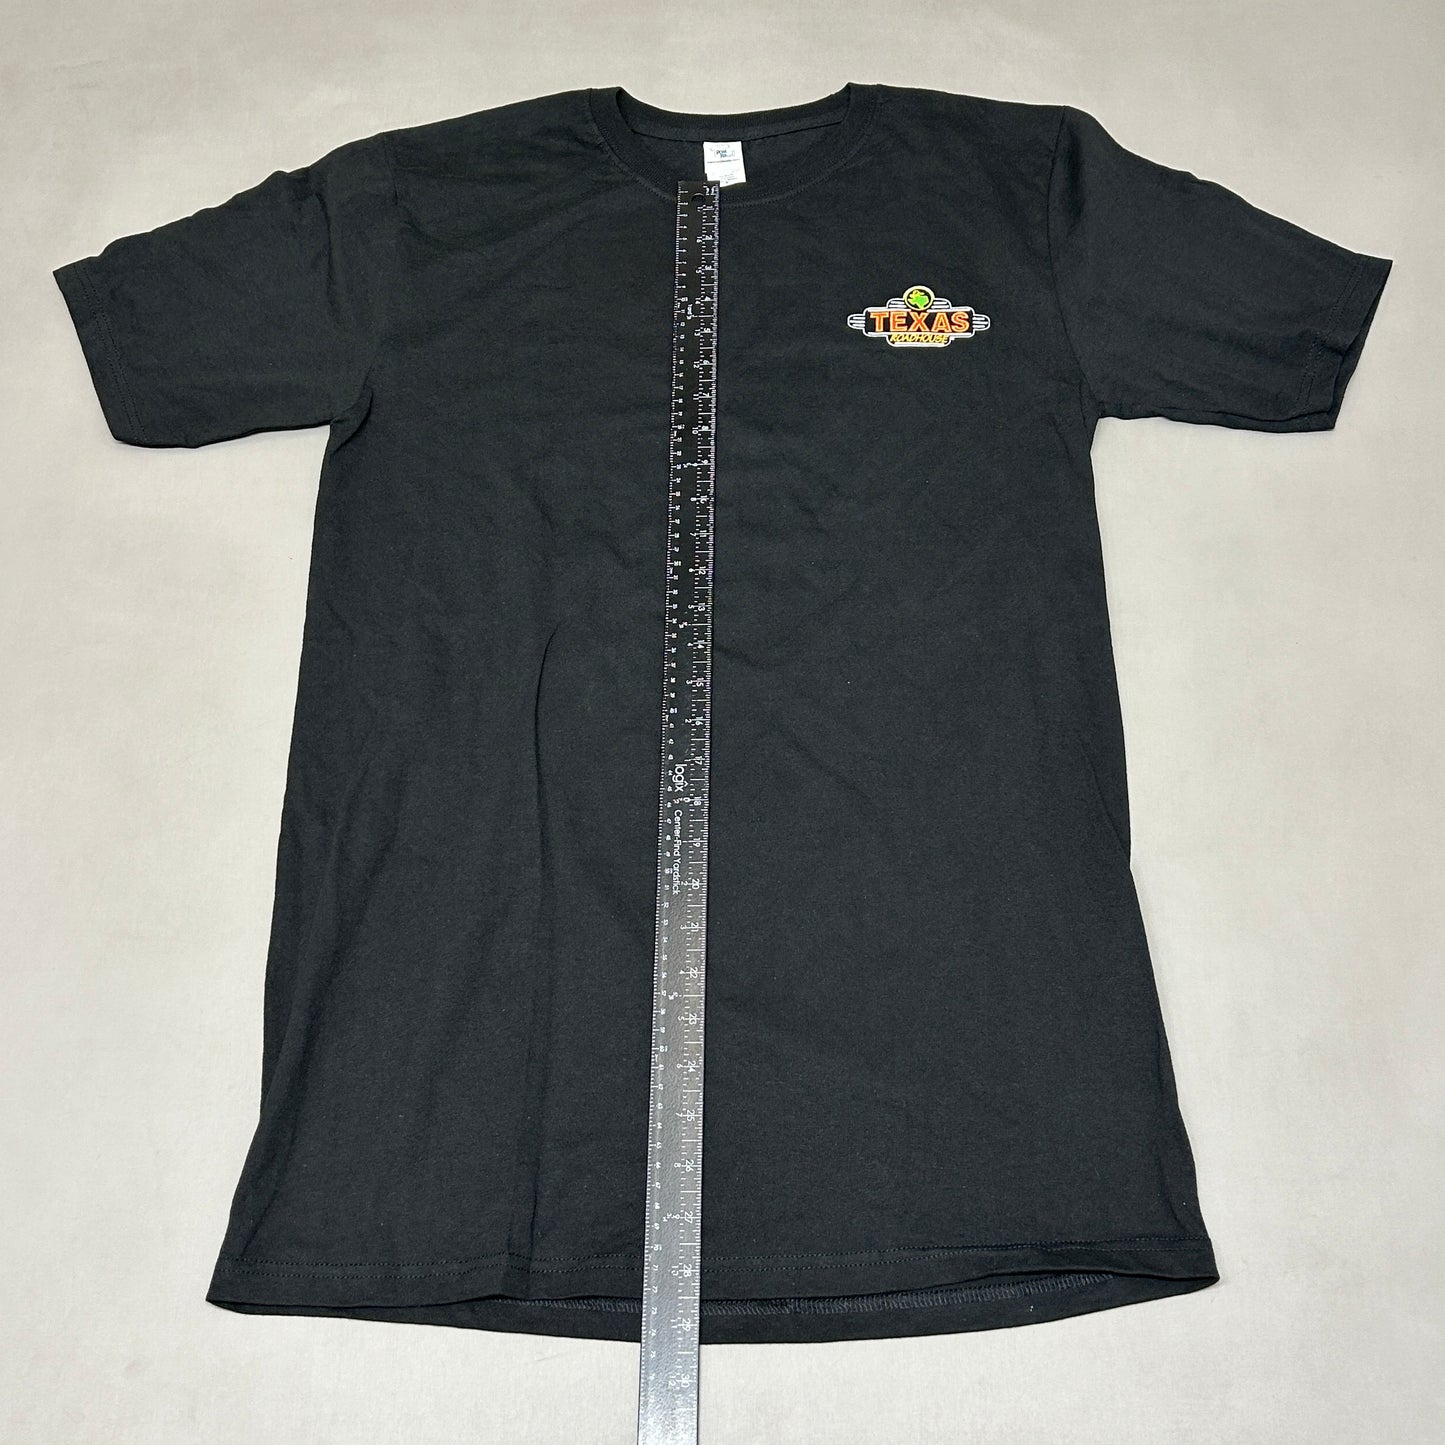 TEXAS ROADHOUSE Employee Uniform Short Sleeved T-Shirt Sz Men's Medium Black (New)